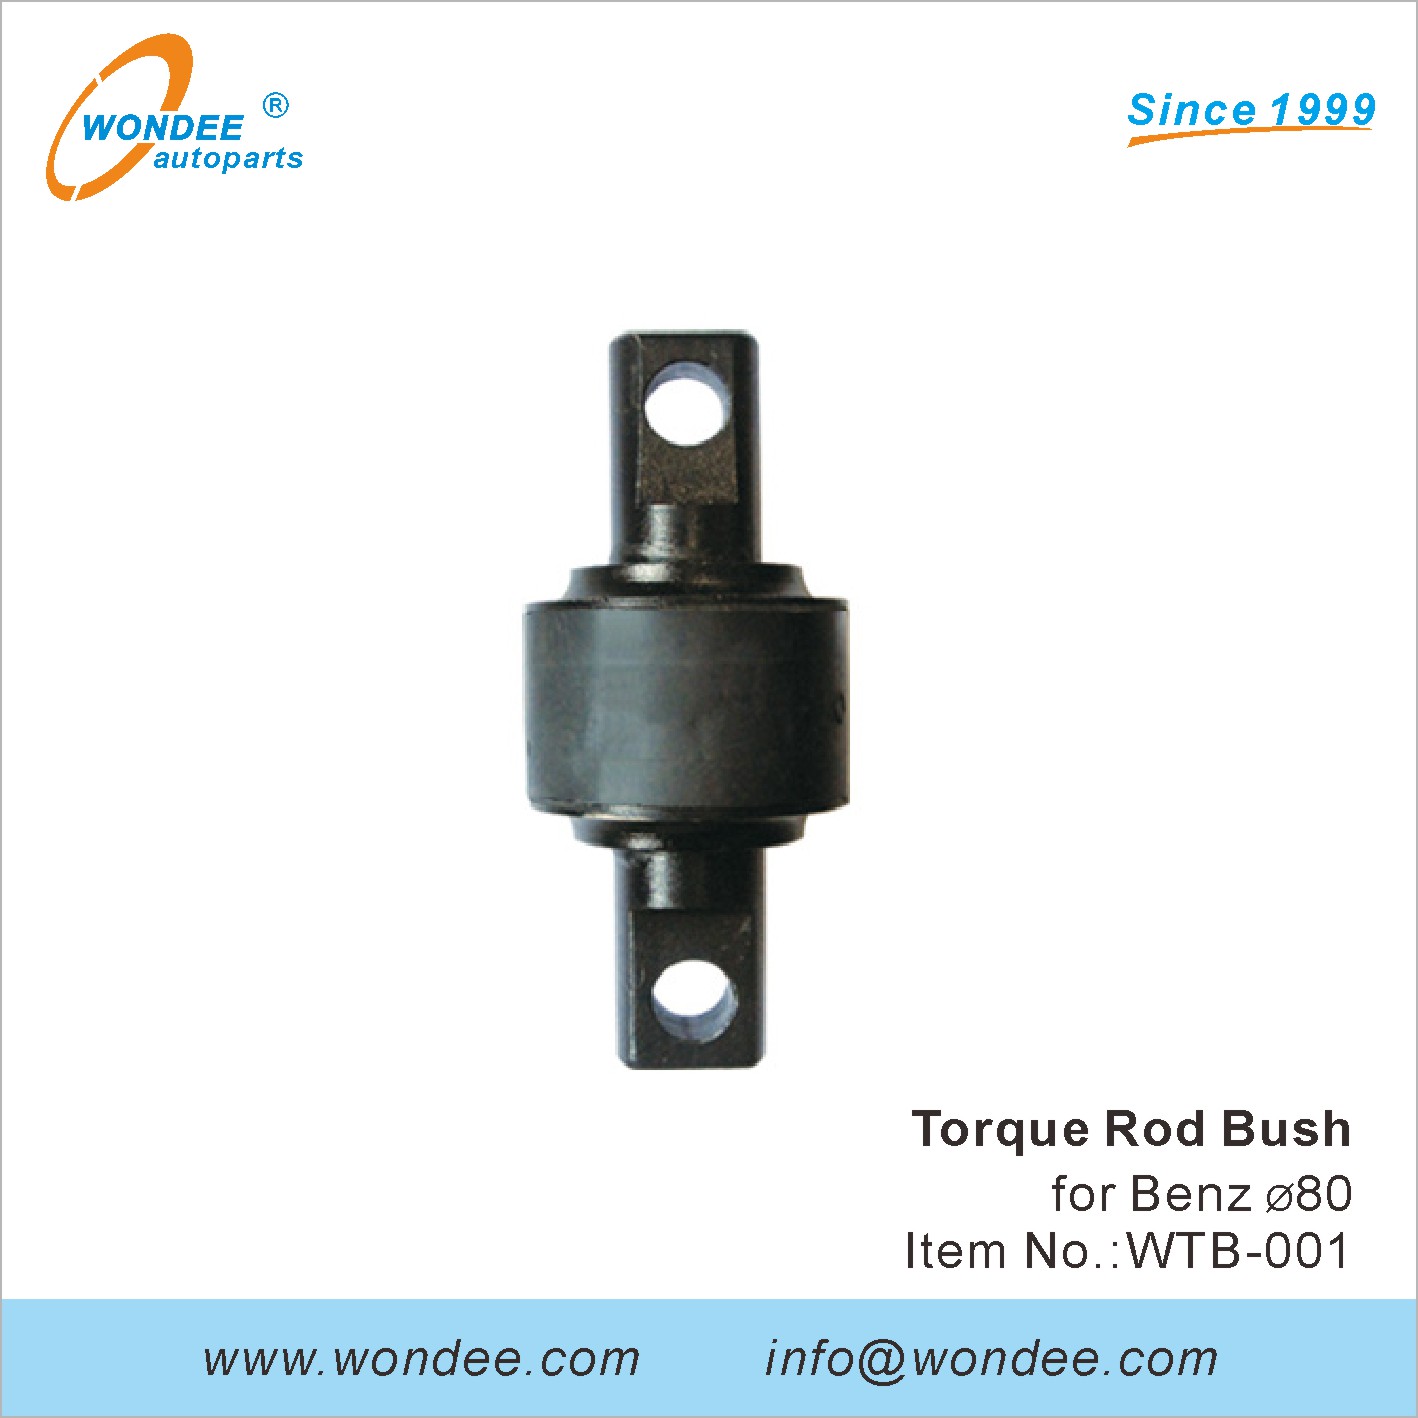 WONDEE torque rod bush (1)